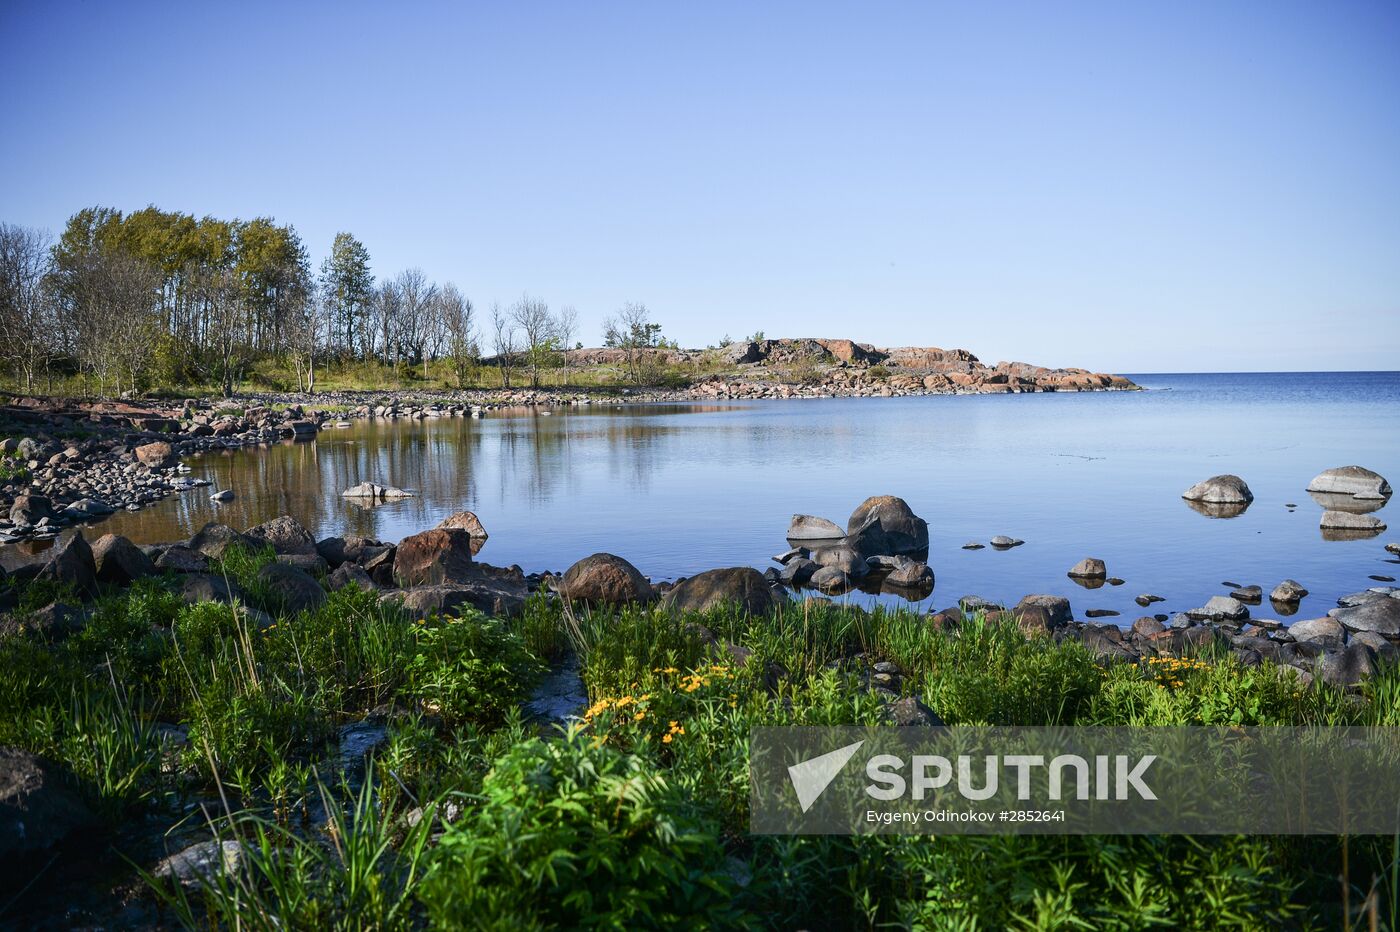 Gogland island in Gulf of Finland